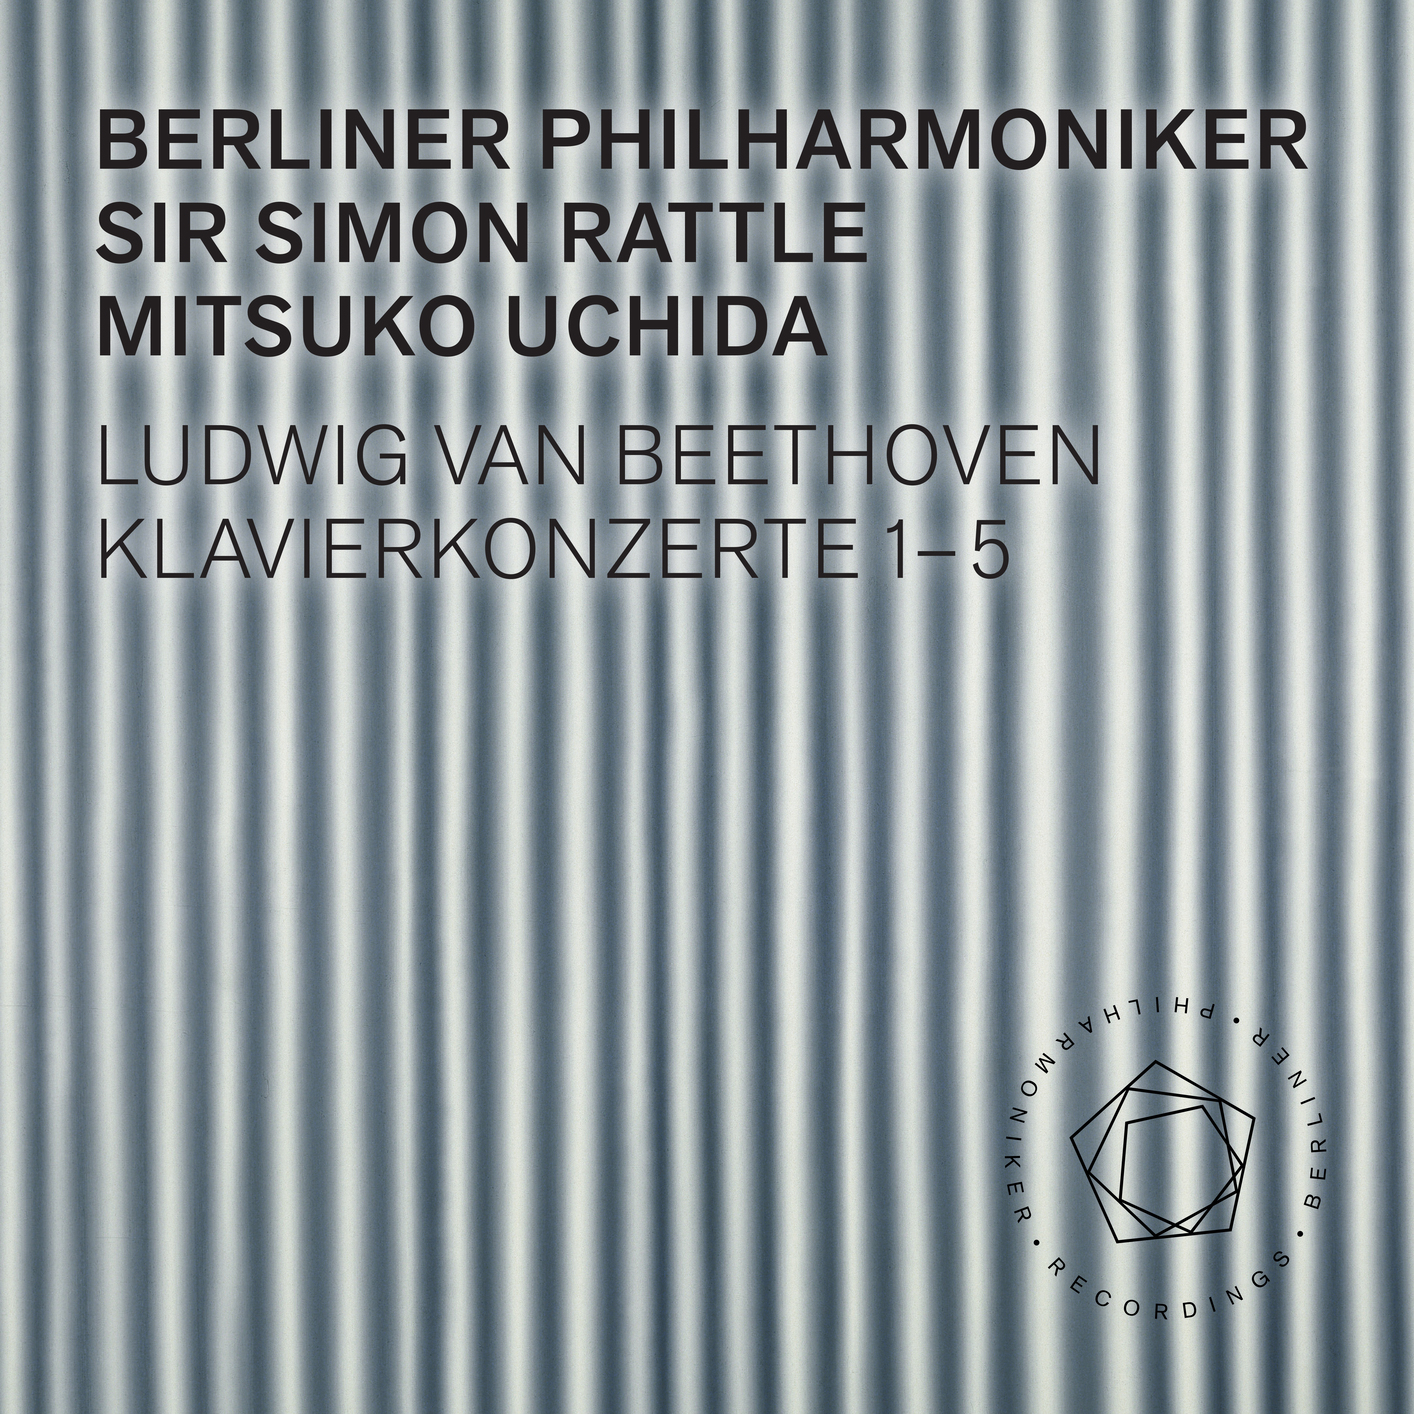 Berliner Philharmoniker, Sir Simon Rattle and Mitsuko Uchida - Beethoven: Piano Concertos 1-5 (2019) [FLAC 24bit/48kHz]